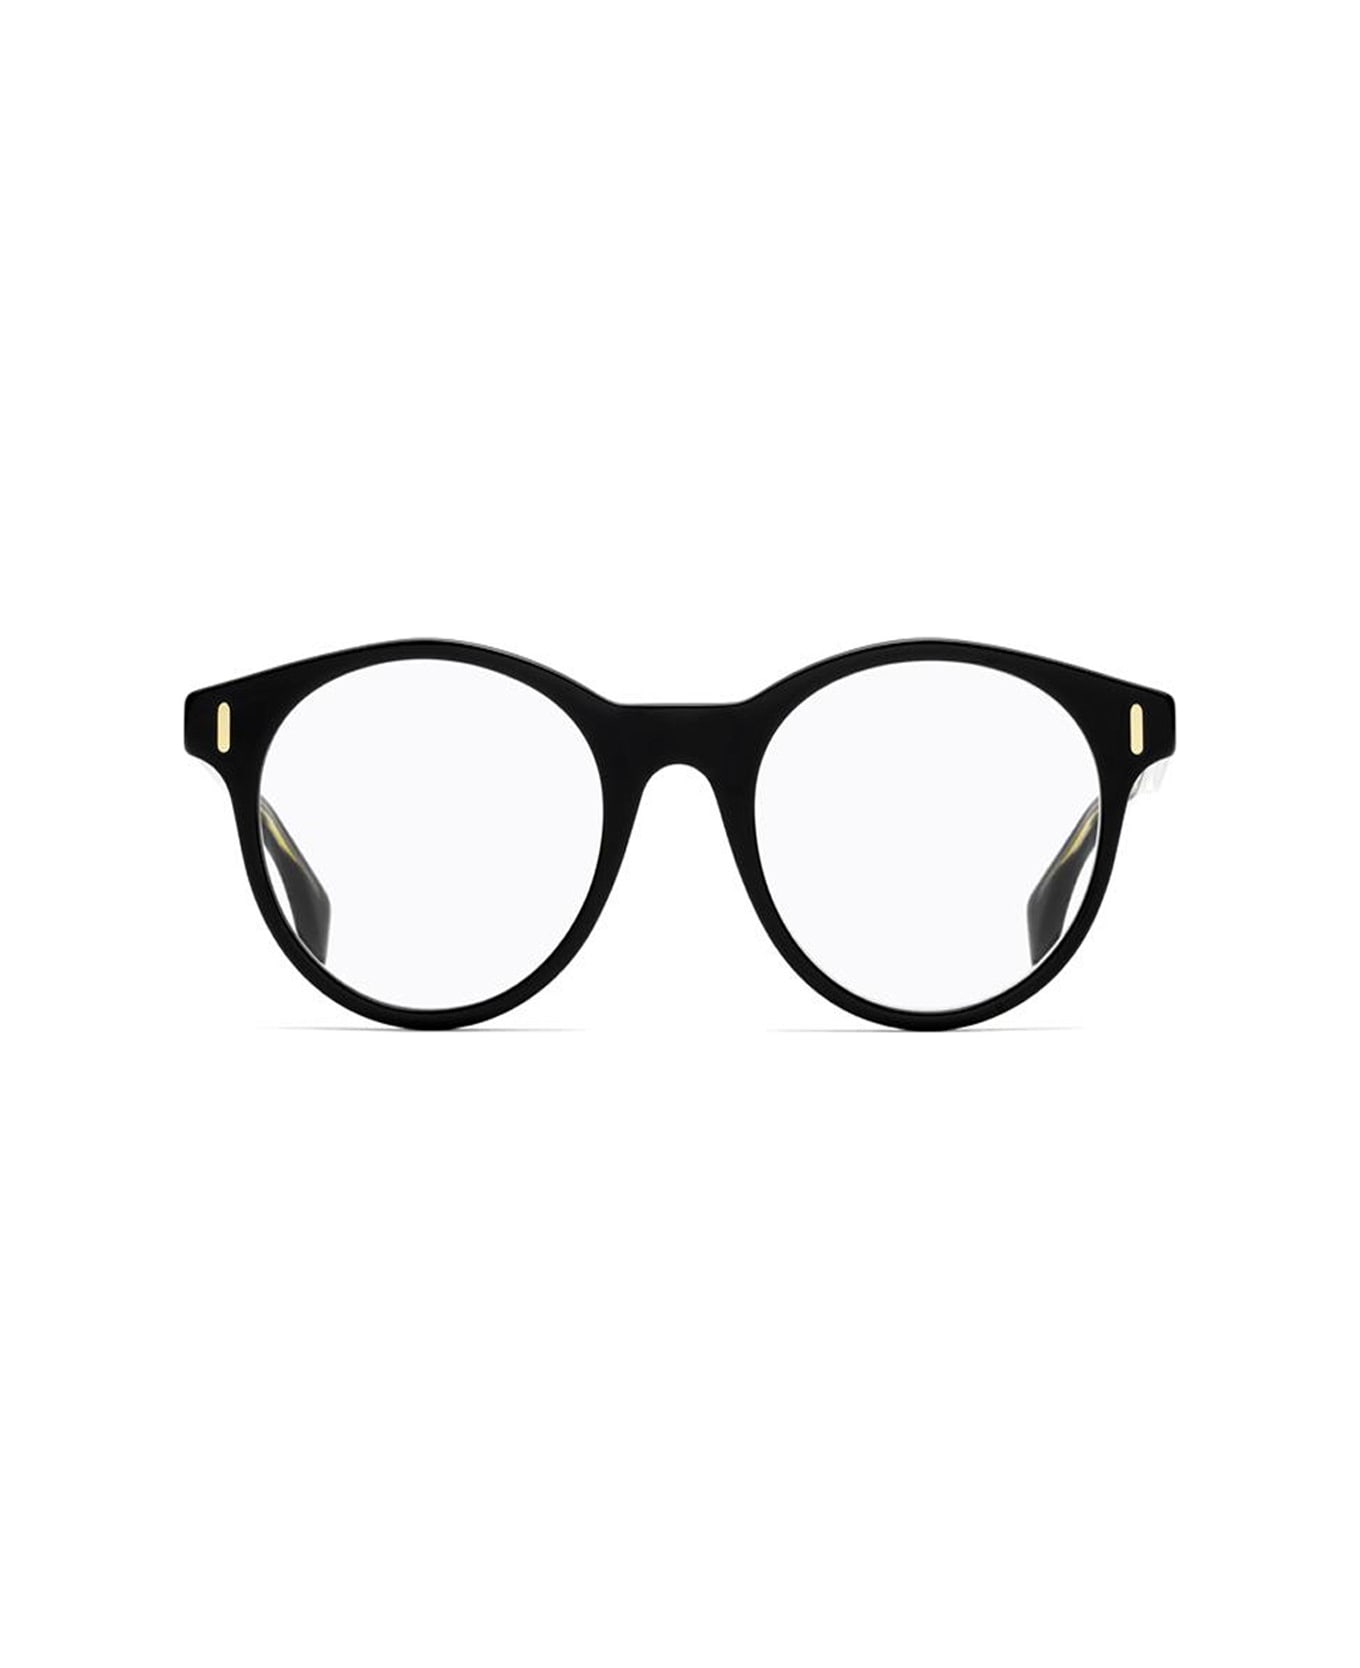 Fendi Eyewear Fendi Ff M0046 Glasses - Nero